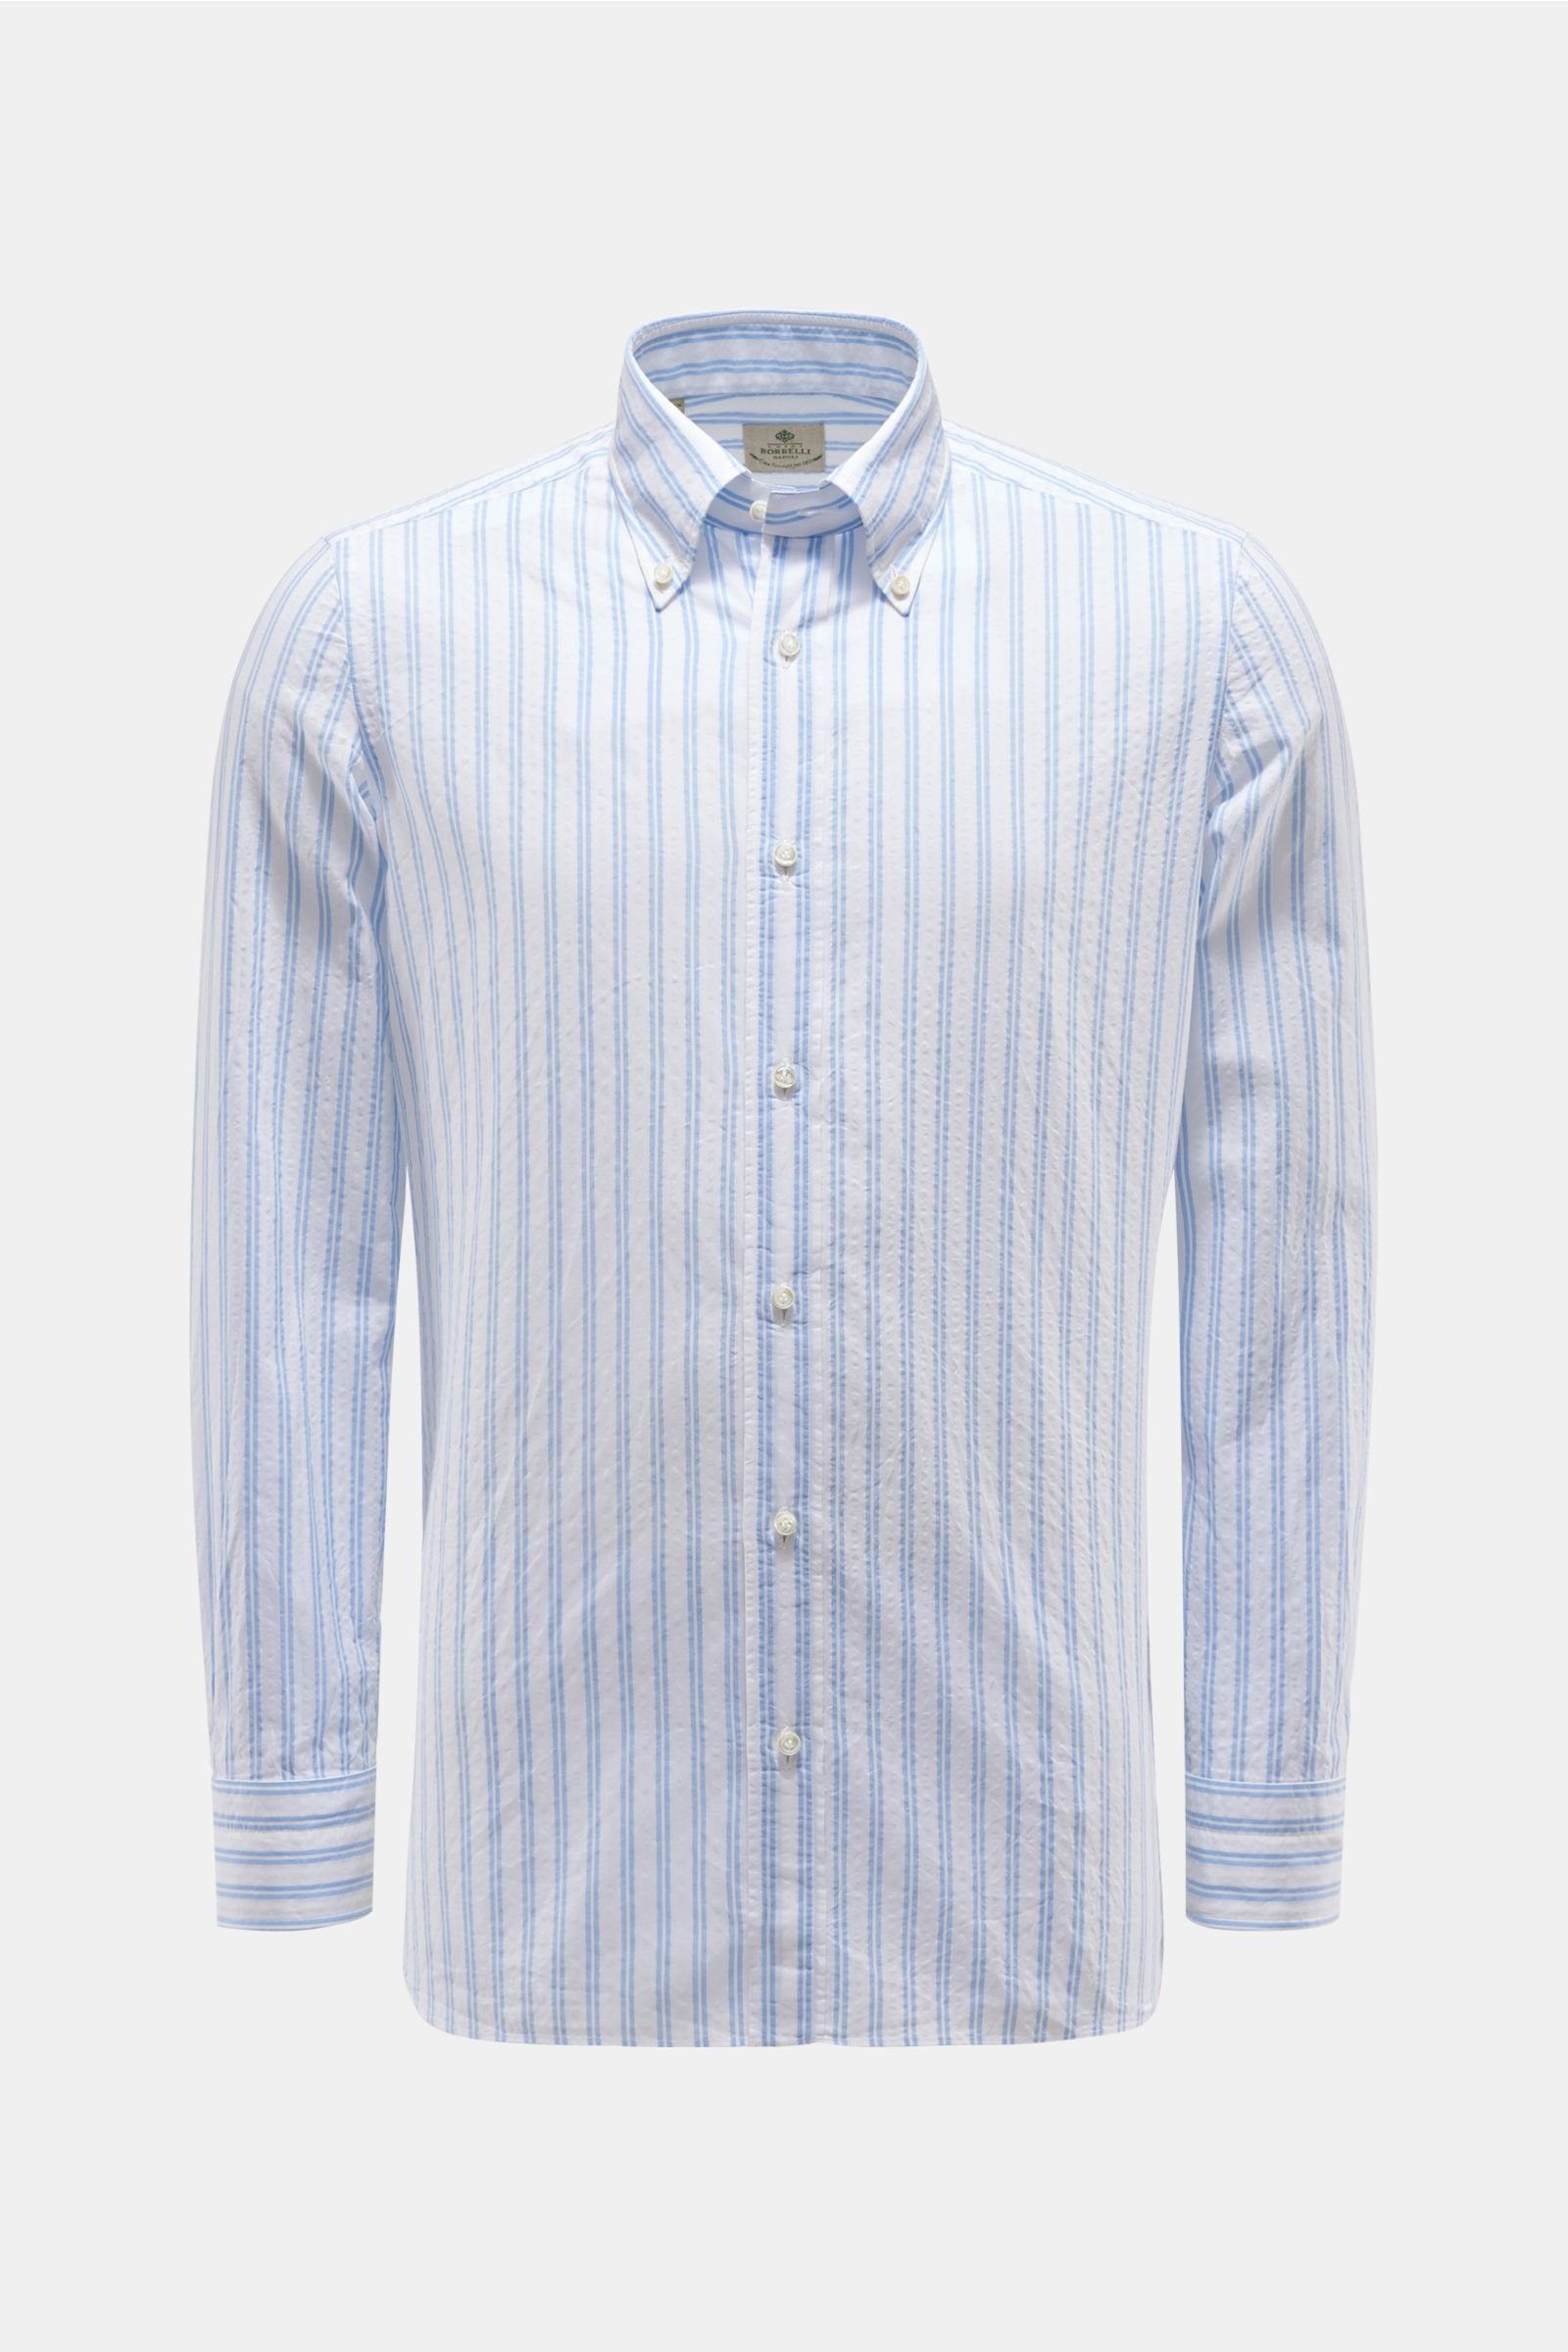 Seersucker shirt button-down collar light blue/white striped